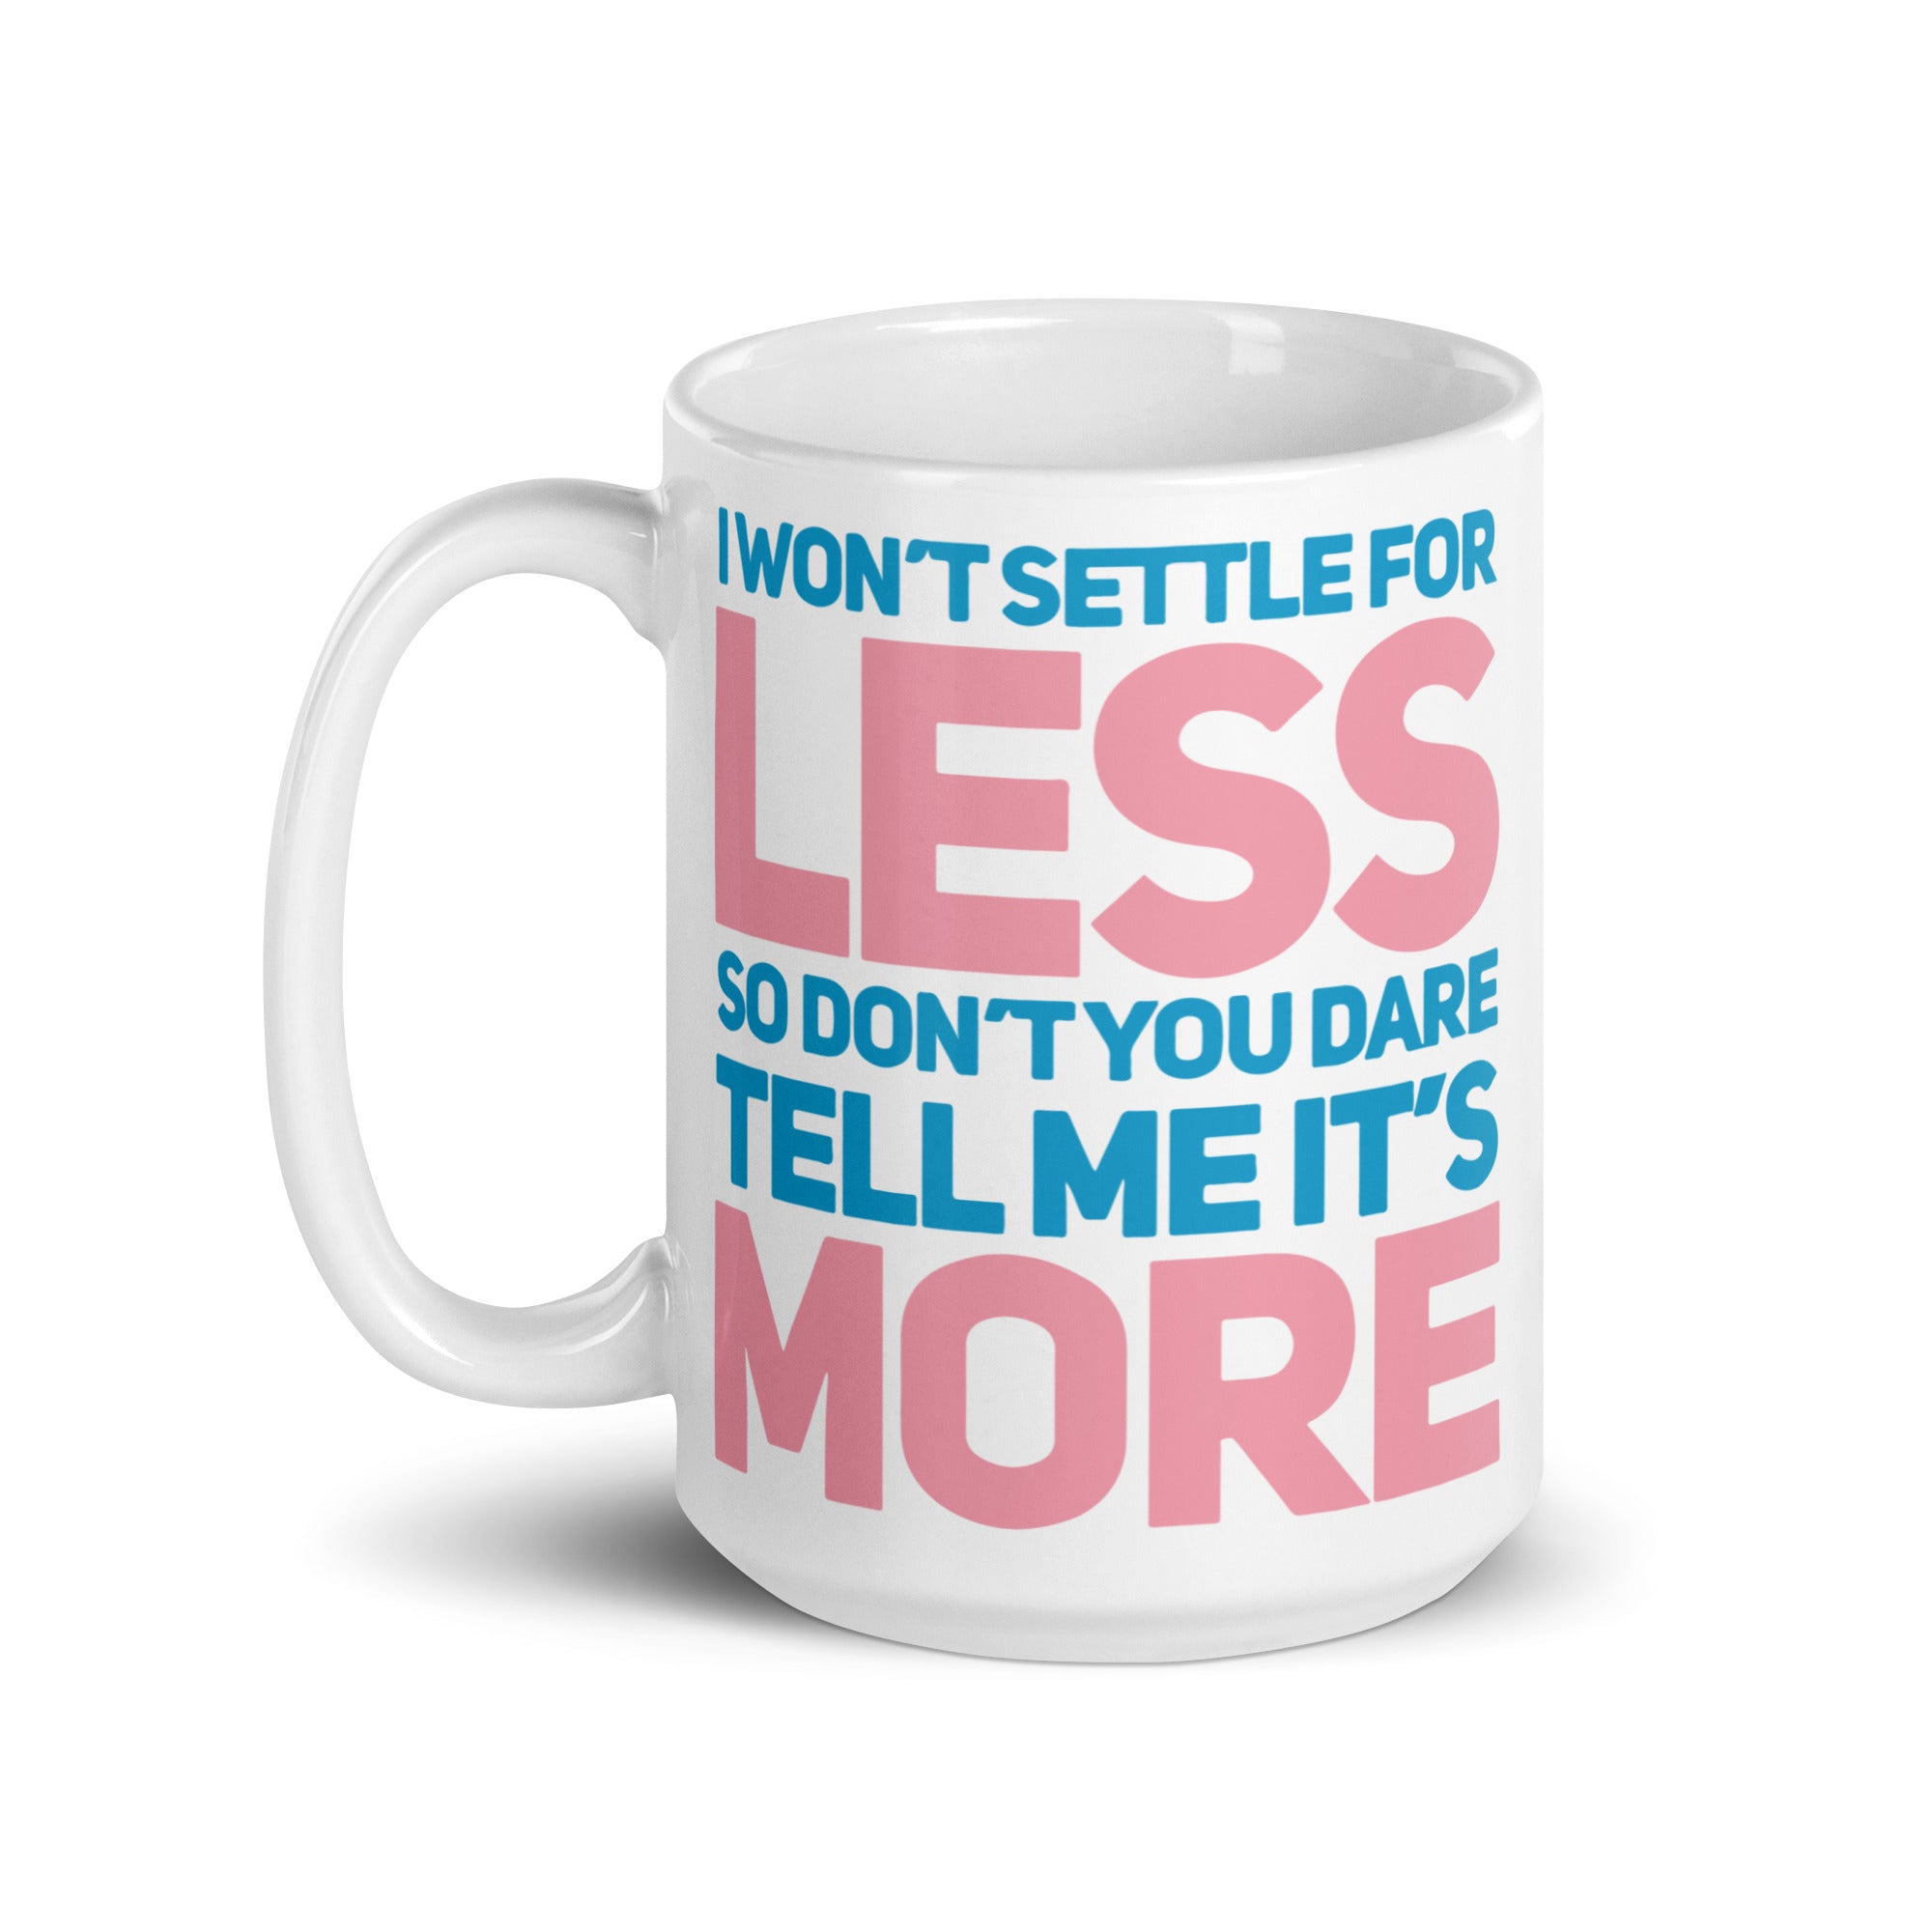 "I Wont Settle For Less So Dont Tell Me Its More" Mug